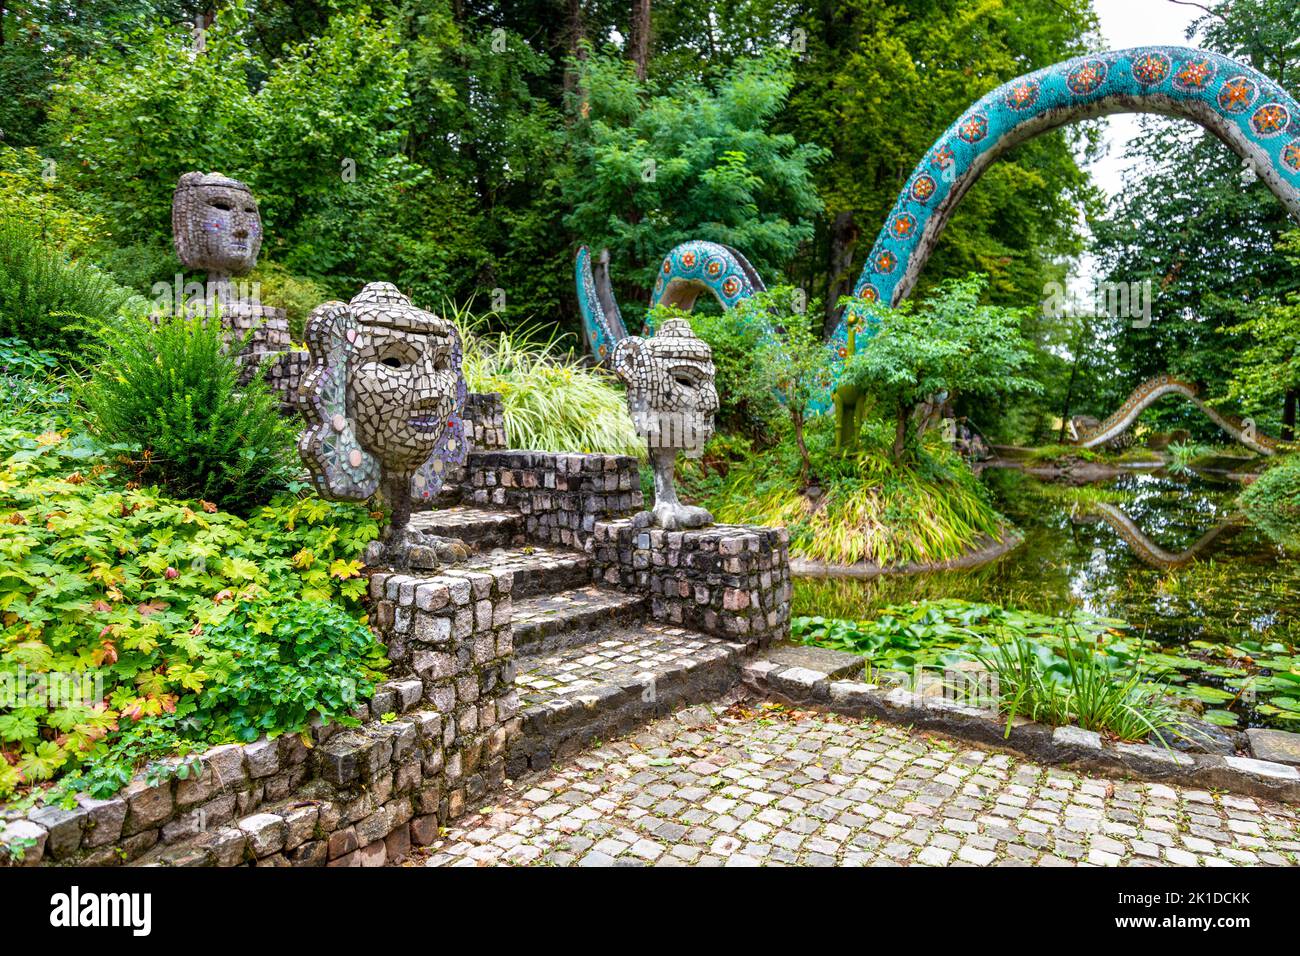 Mosaic concrete sculptures decorating the magic forest at Bruno Weber Park, Dietikon, Switzerland Stock Photo